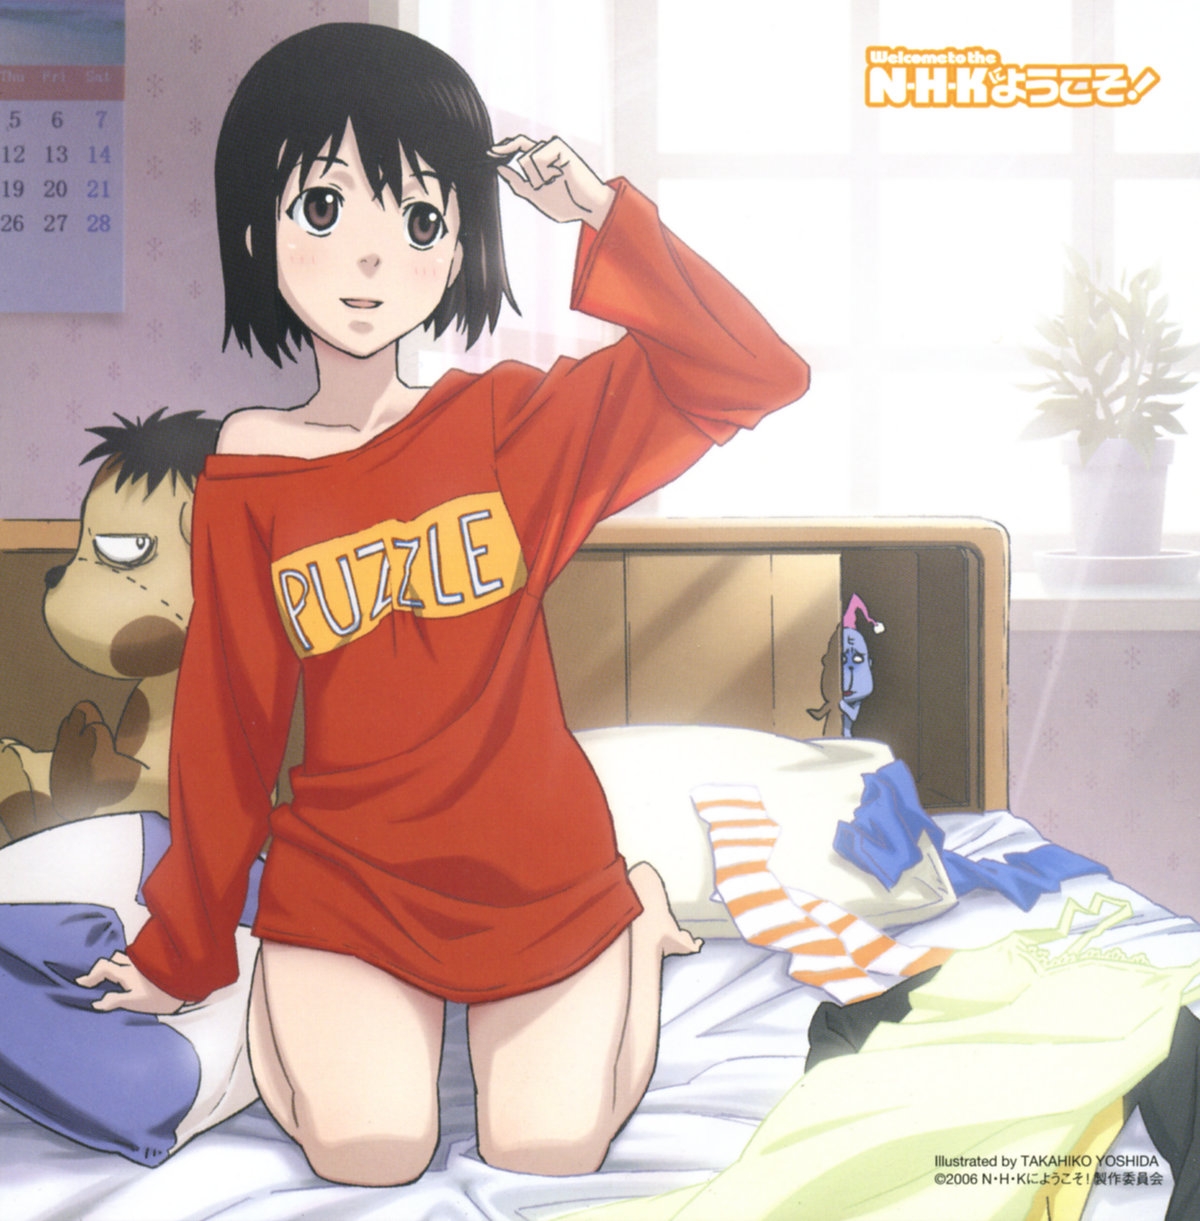 welcome to NHK image - Anime Fans of modDB - Mod DB